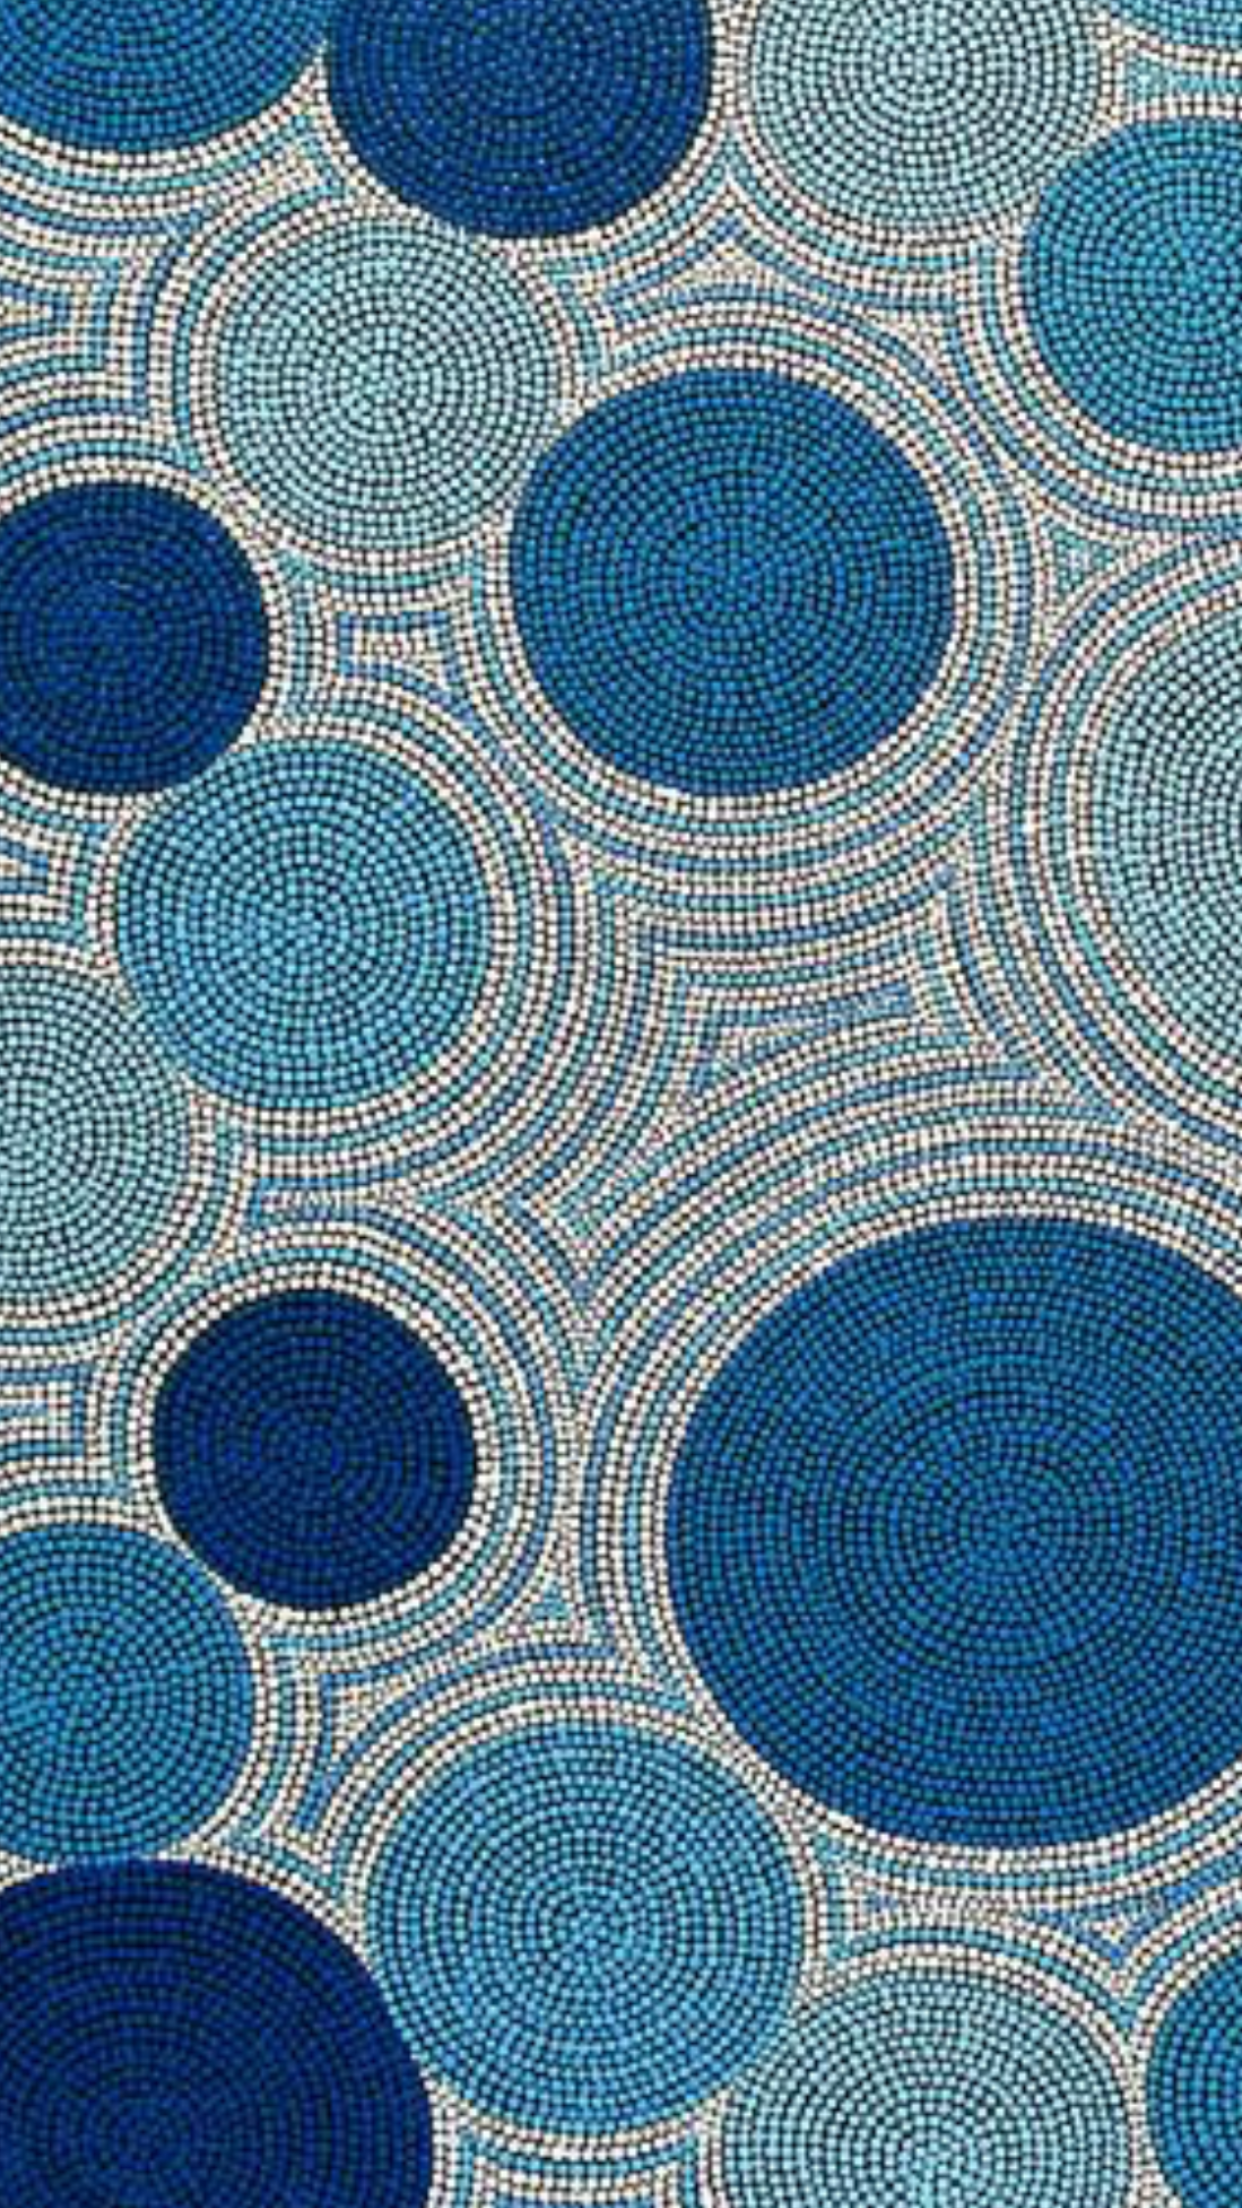 I Love Blues. Mosaic drawing, Aboriginal